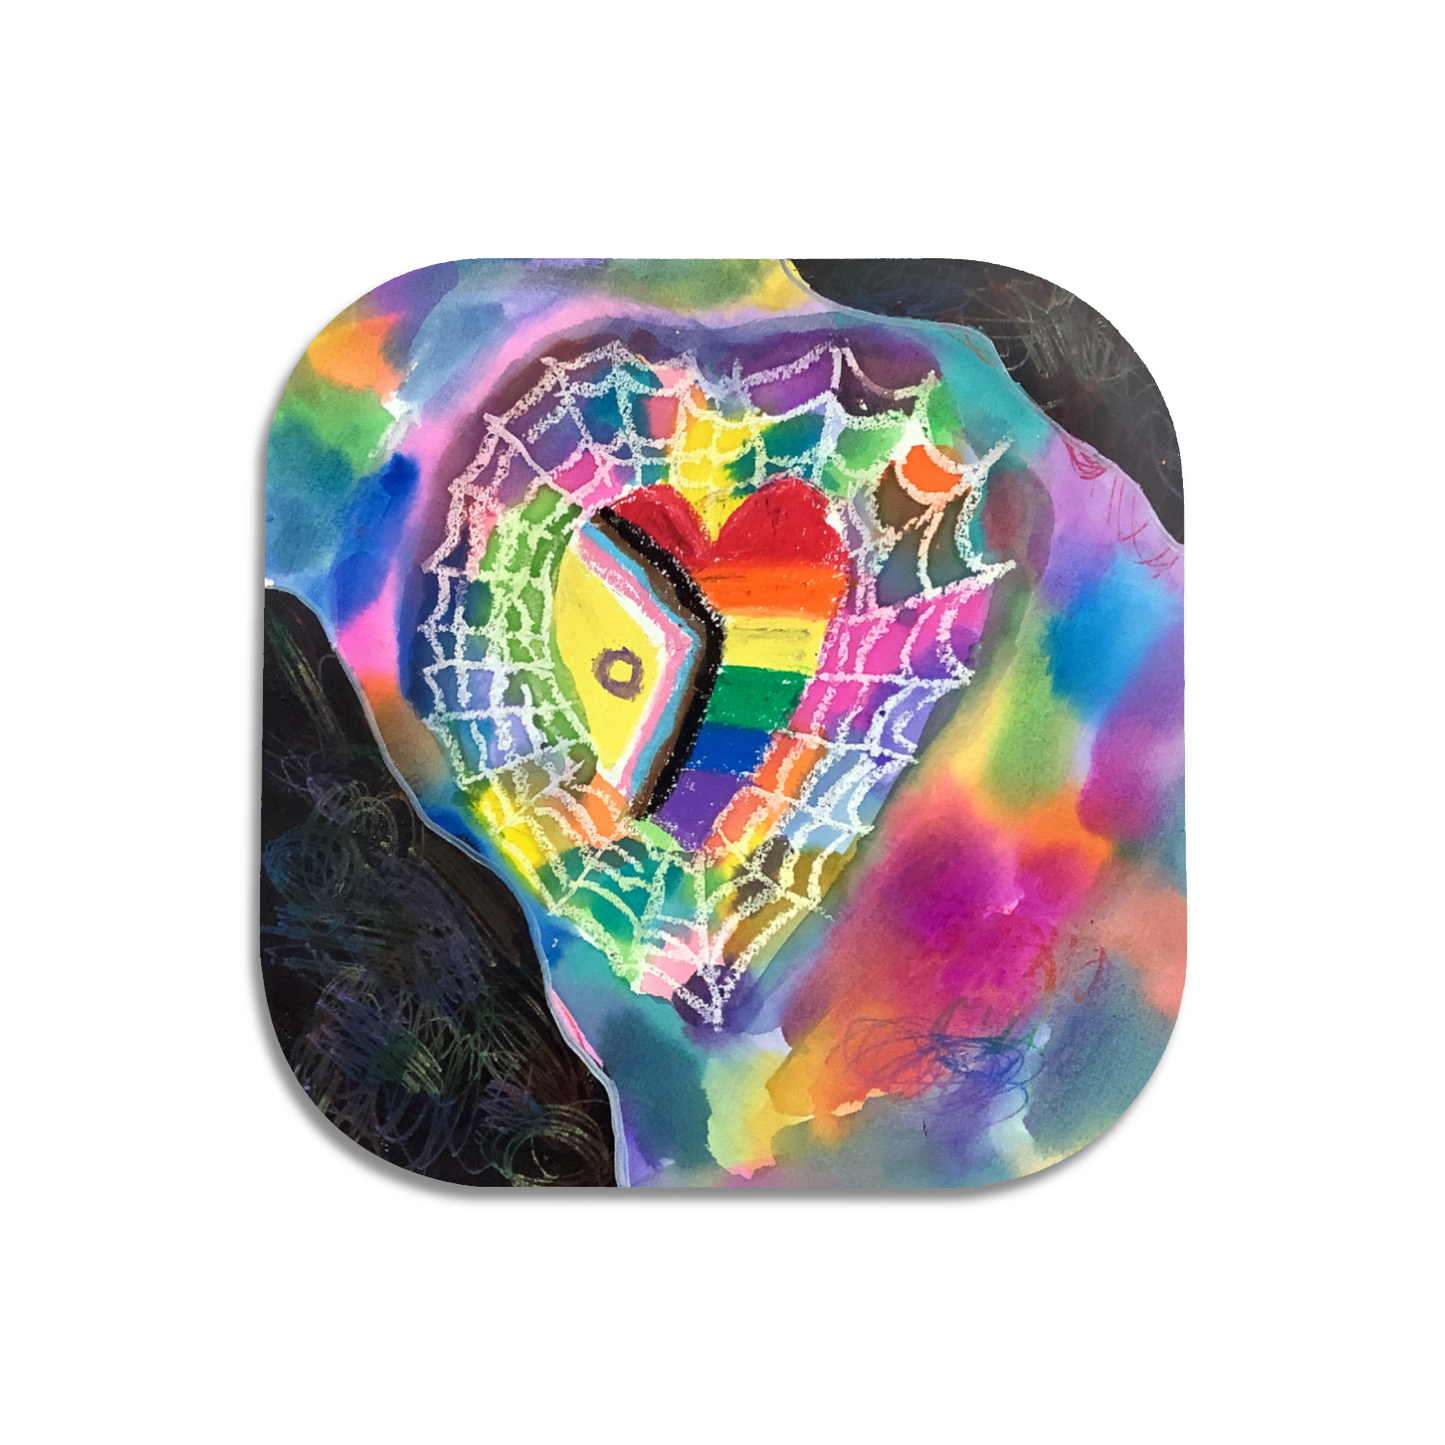 Twist Hearts "Symbols of Love" Single Wooden Coaster